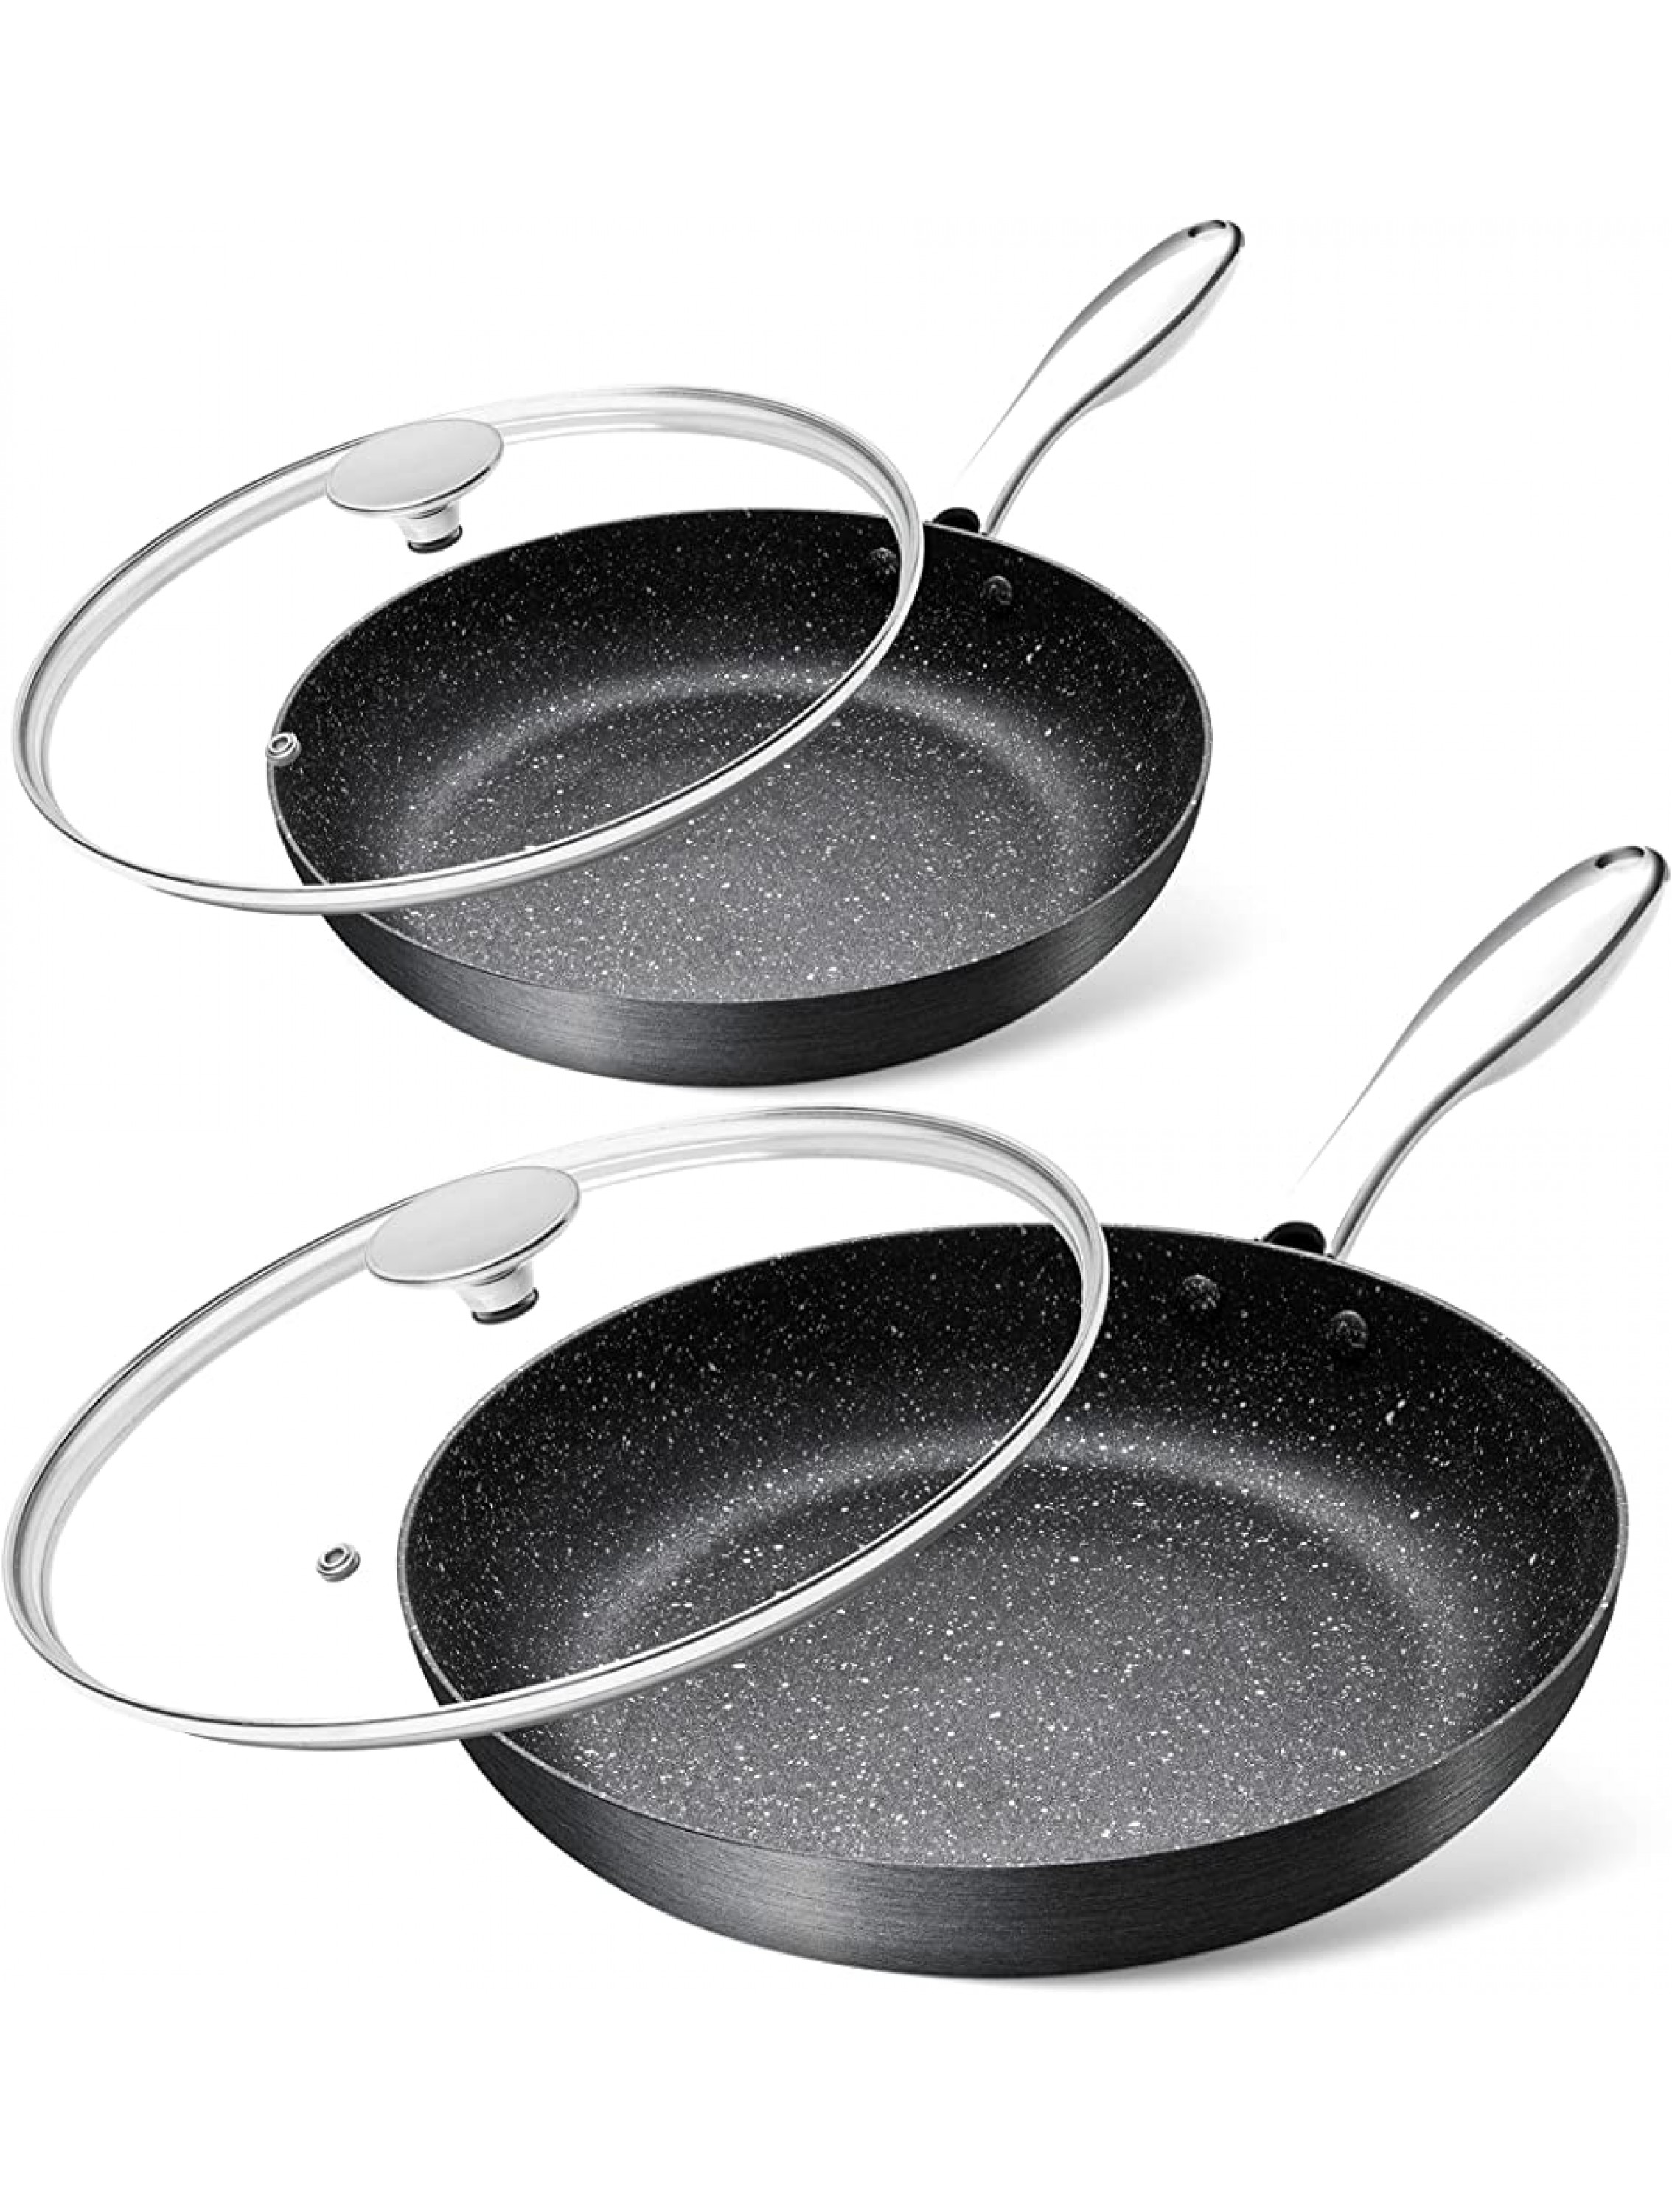 MICHELANGELO Hard Anodized Frying Pans Nonstick with Lid 9.5 & 11 Nonstick Frying Pan Set with Lids Frying Pans for Cooking Nonstick Skillet Sets with Granite-derived Interior 2 Pan Set - B1VK0HBQJ